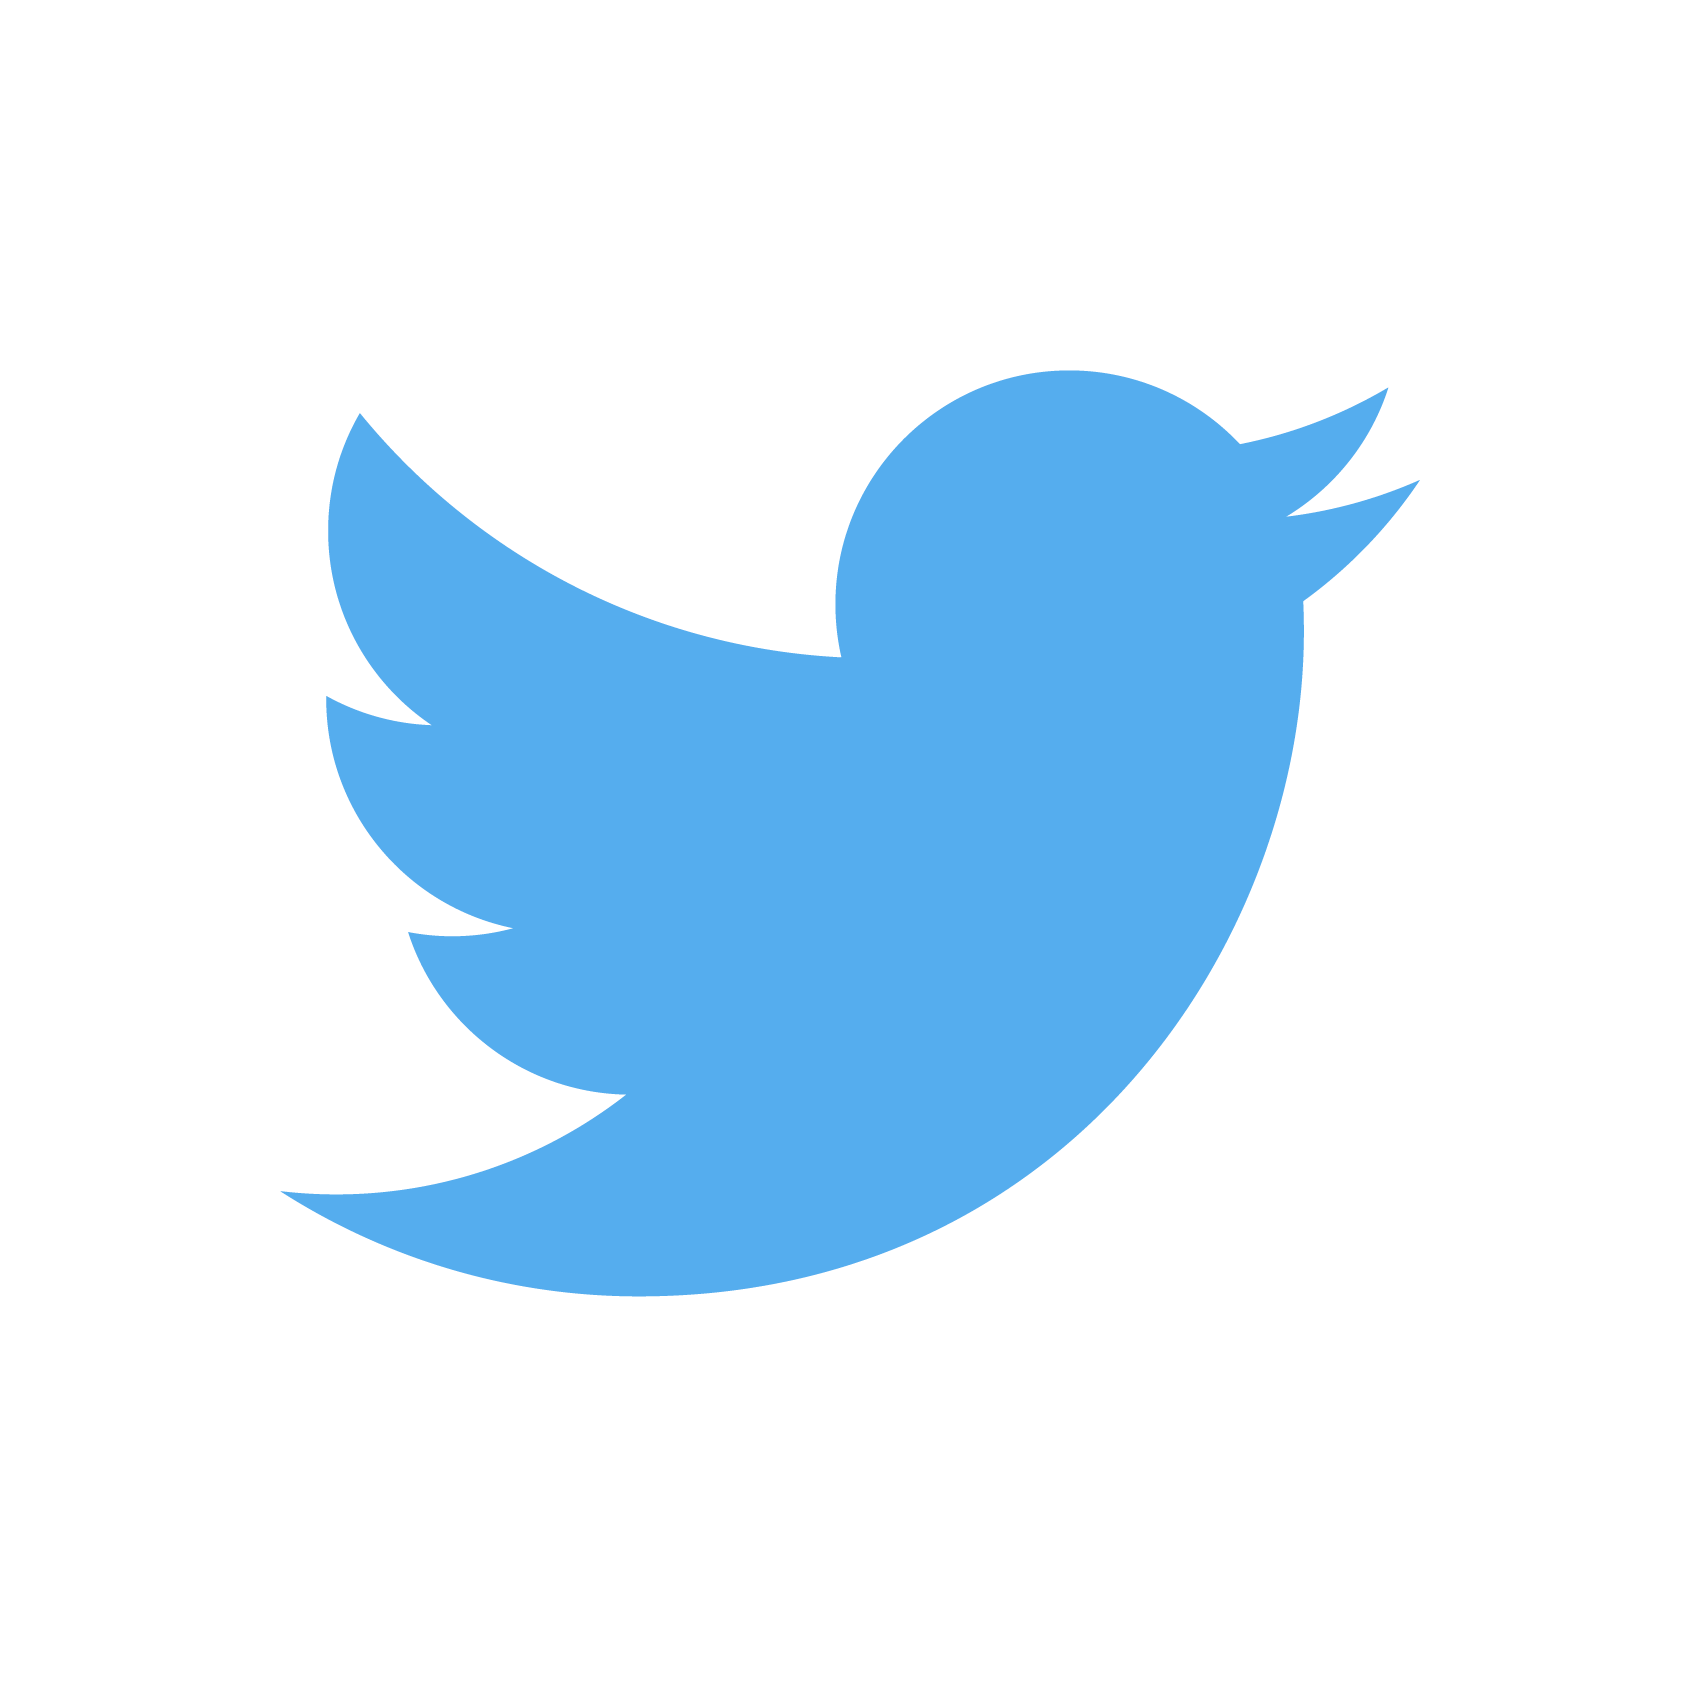 Logotipo de pássaro do Twitter